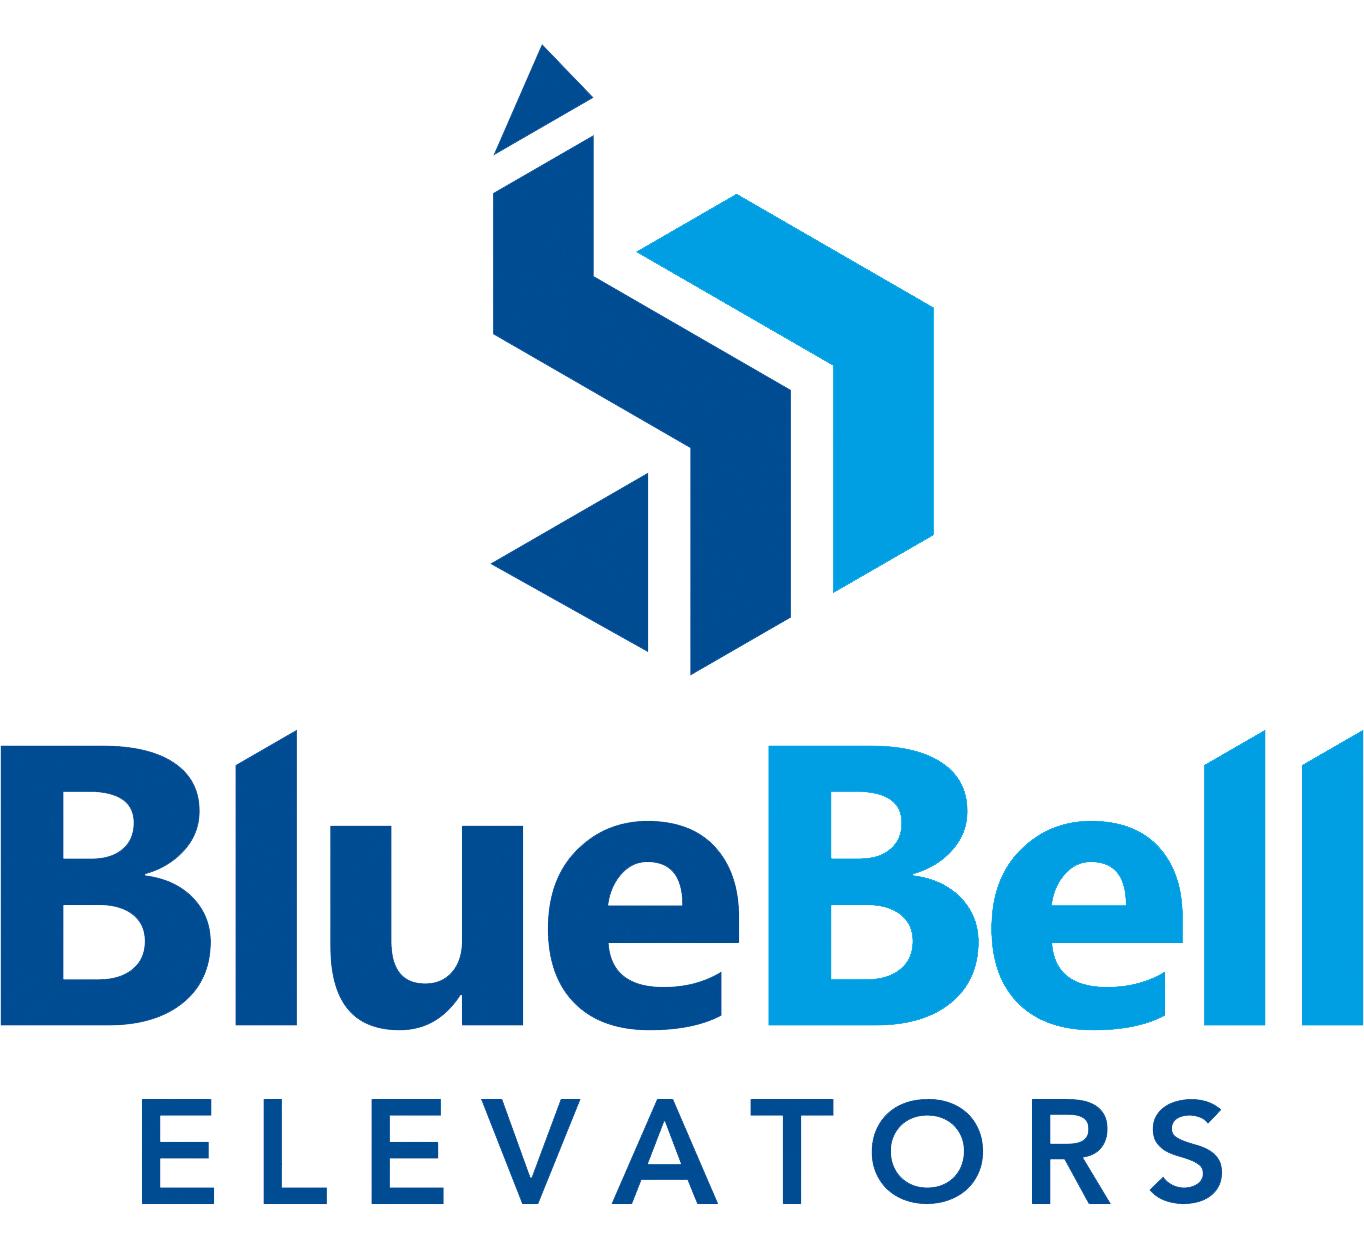 Bluebell elevators